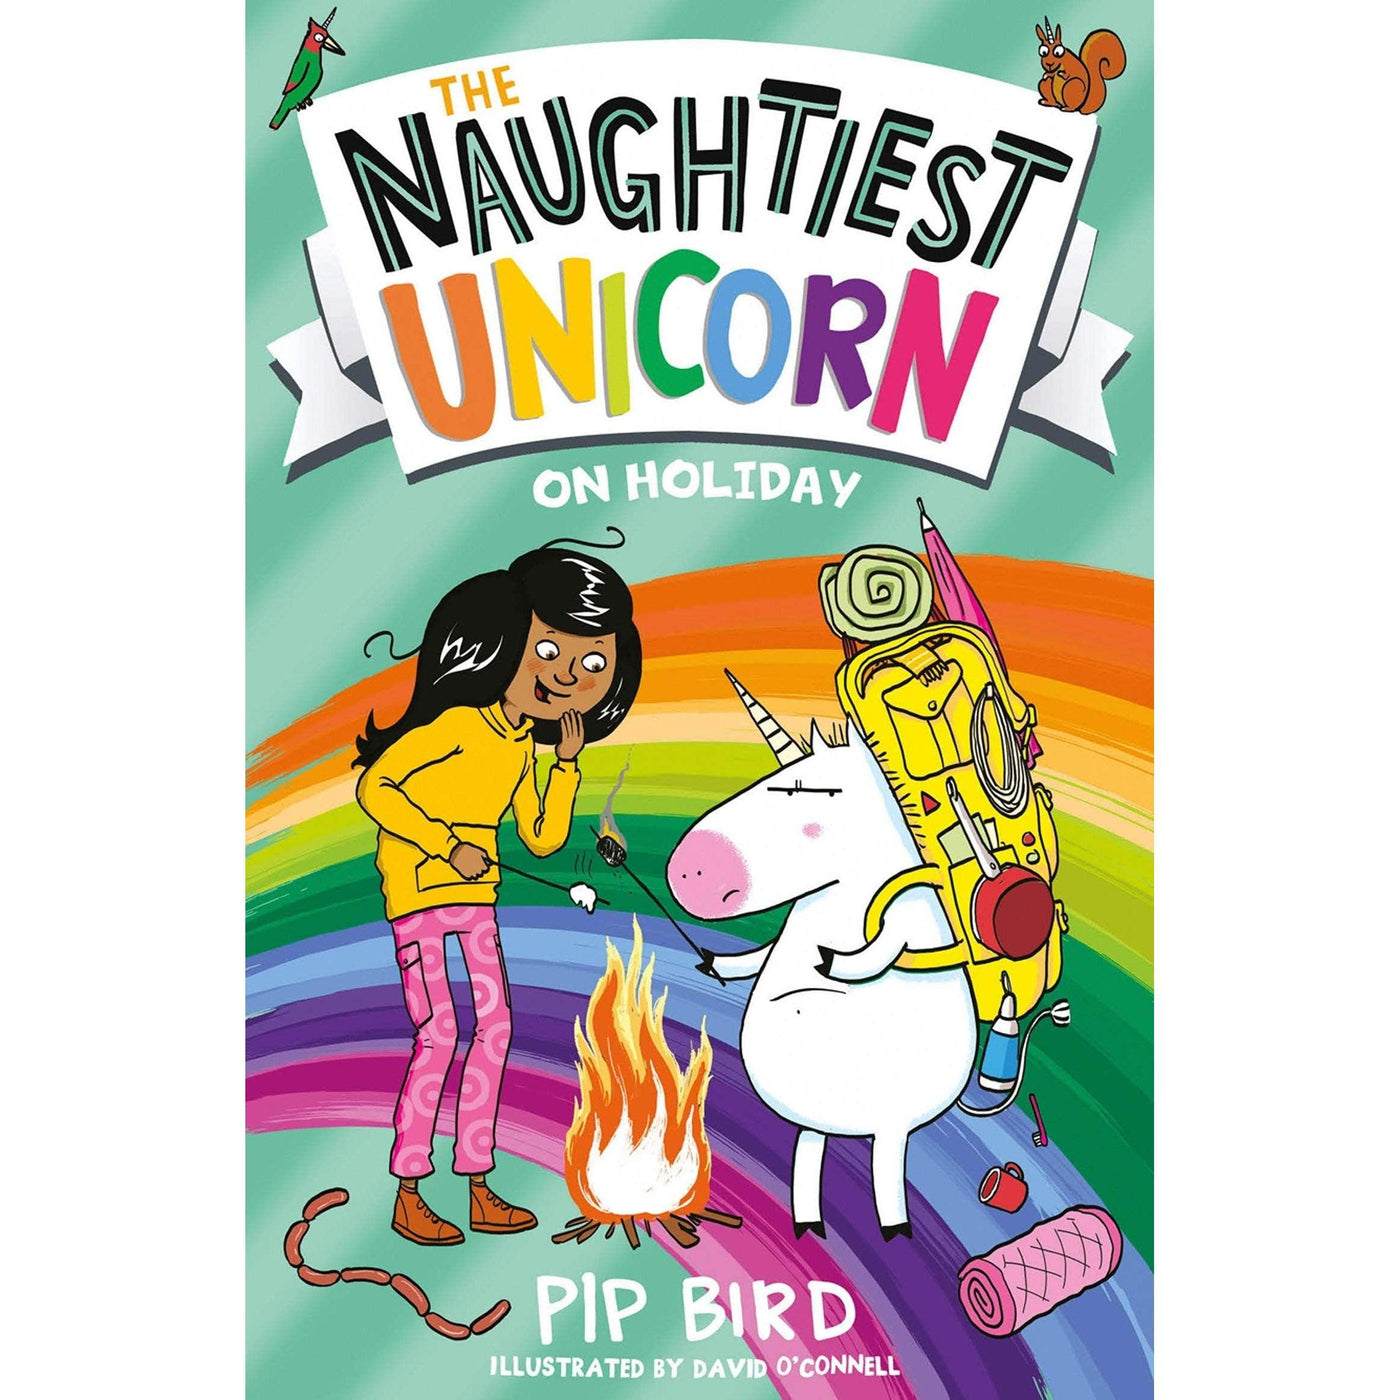 The Naughtiest Unicorn on Holiday (The Naughtiest Unicorn series)